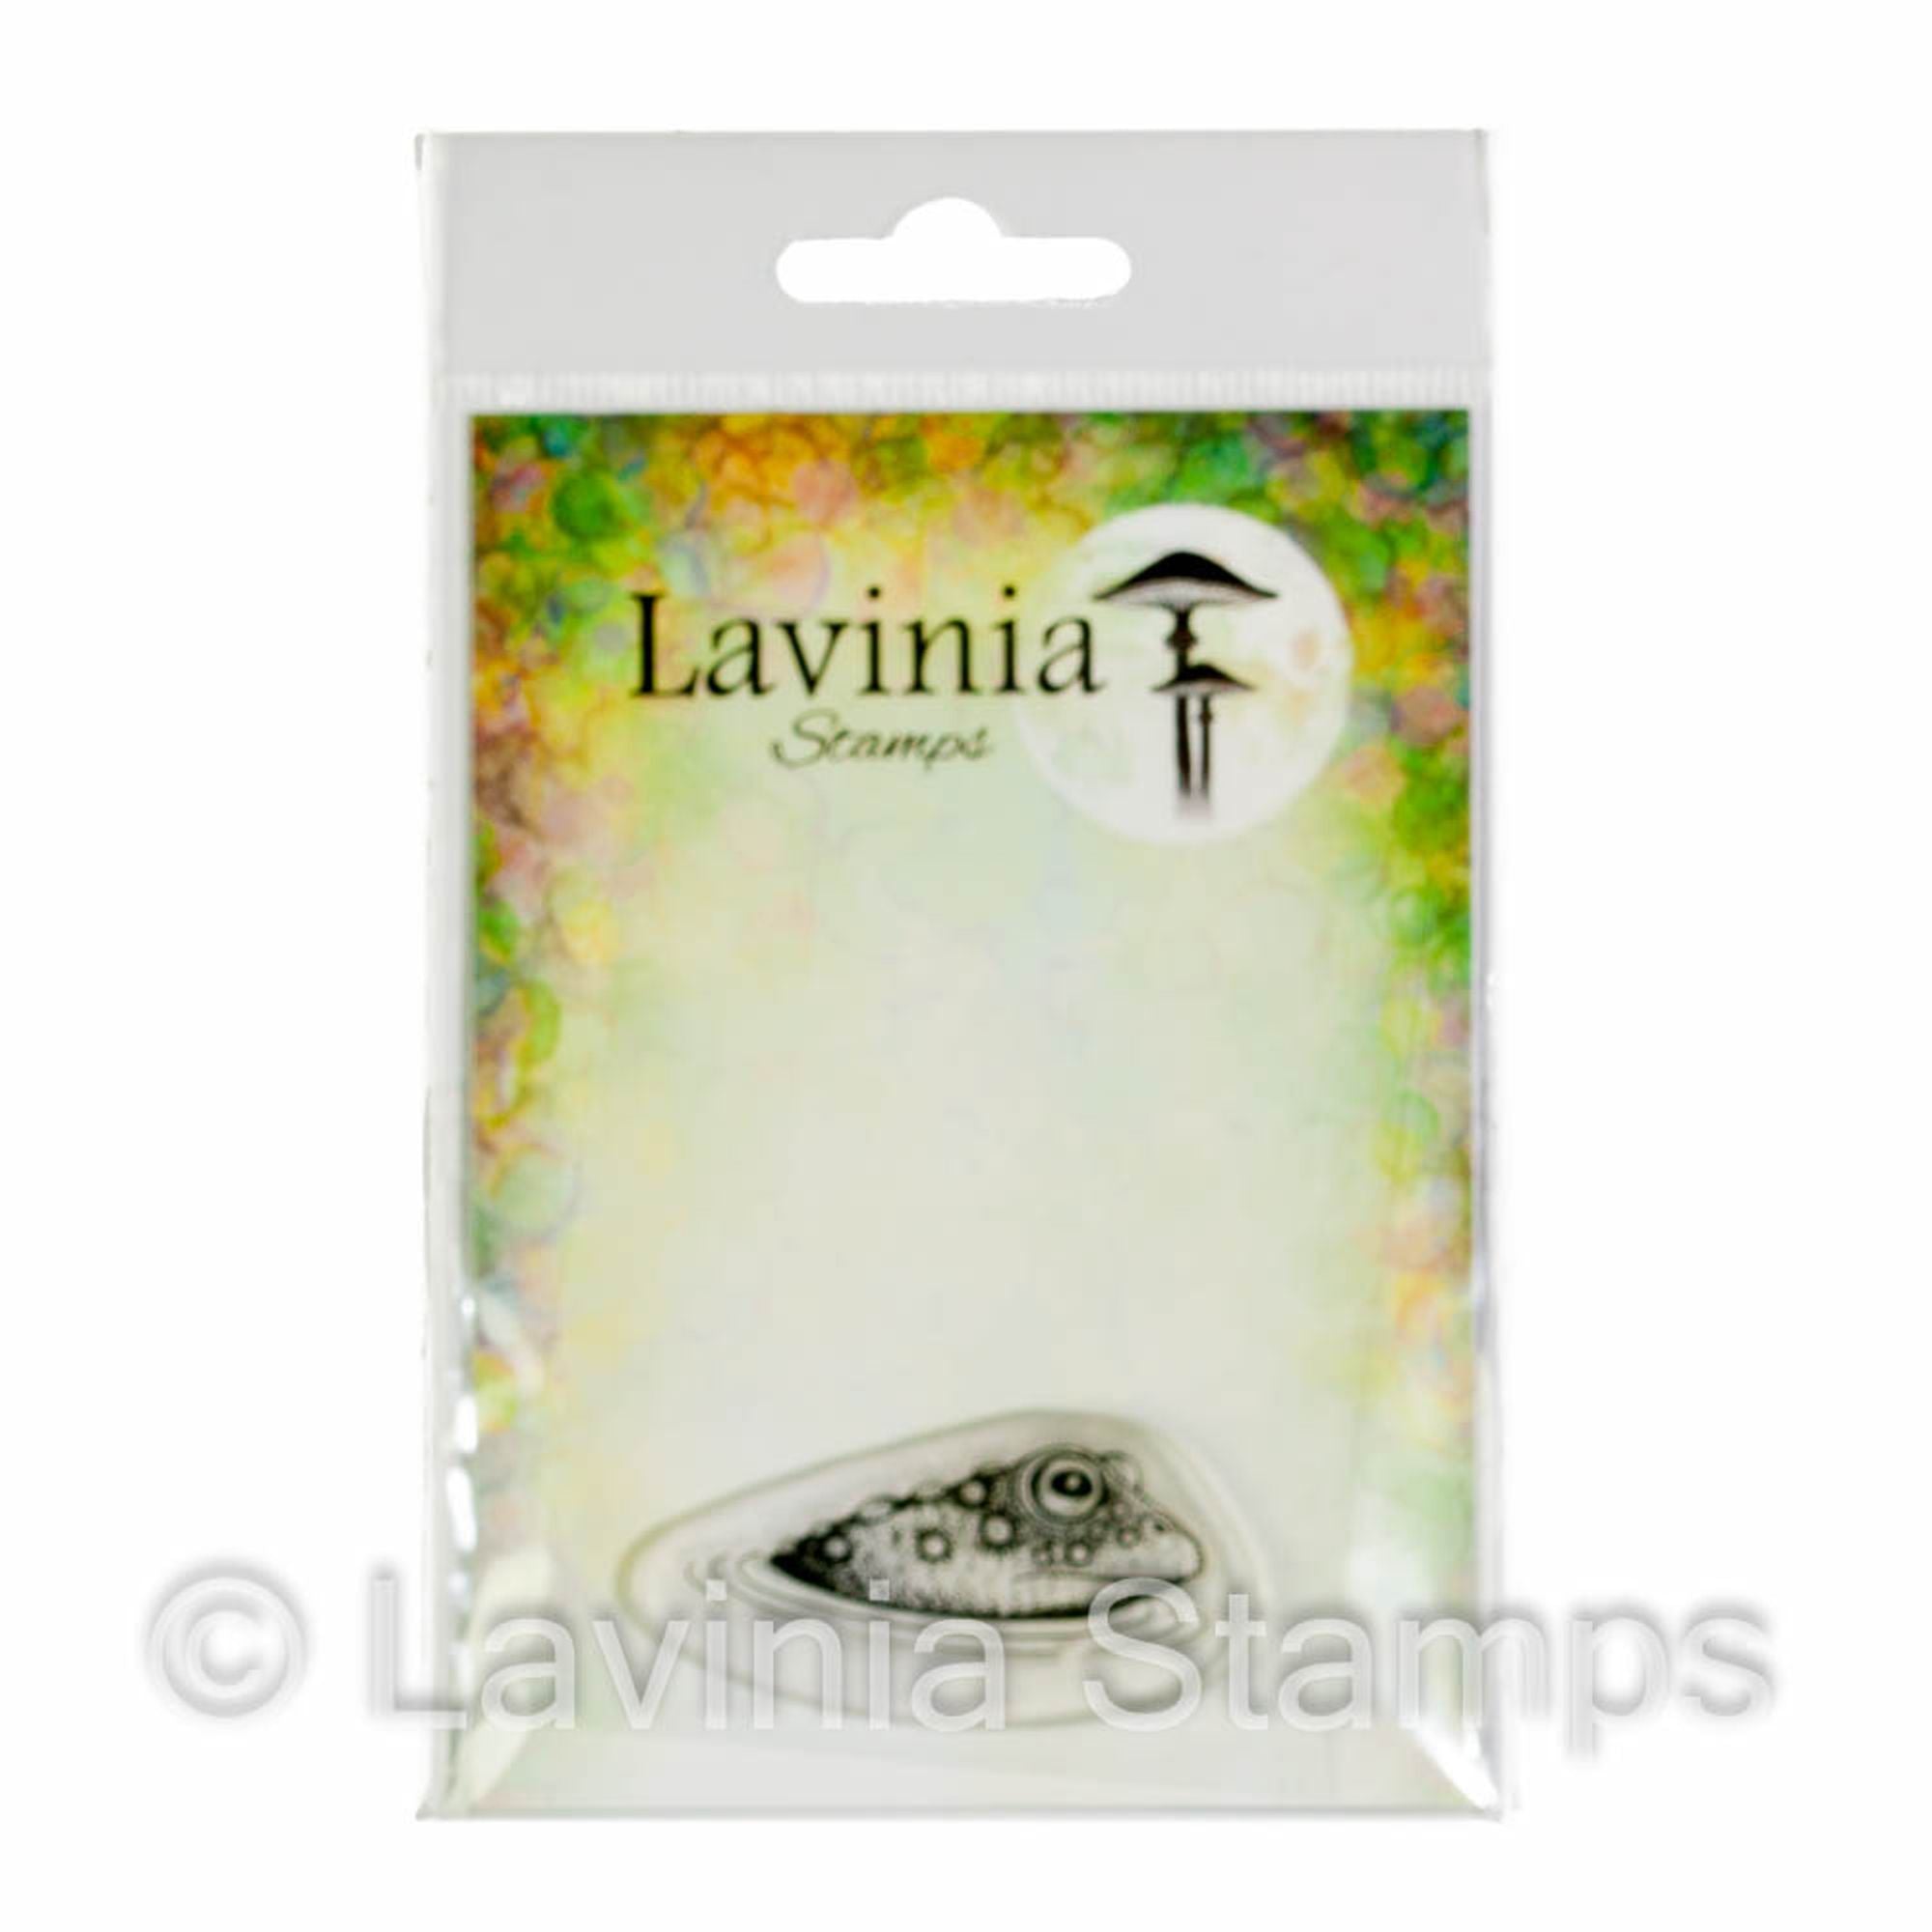 Lavinia Stamps - Bogart